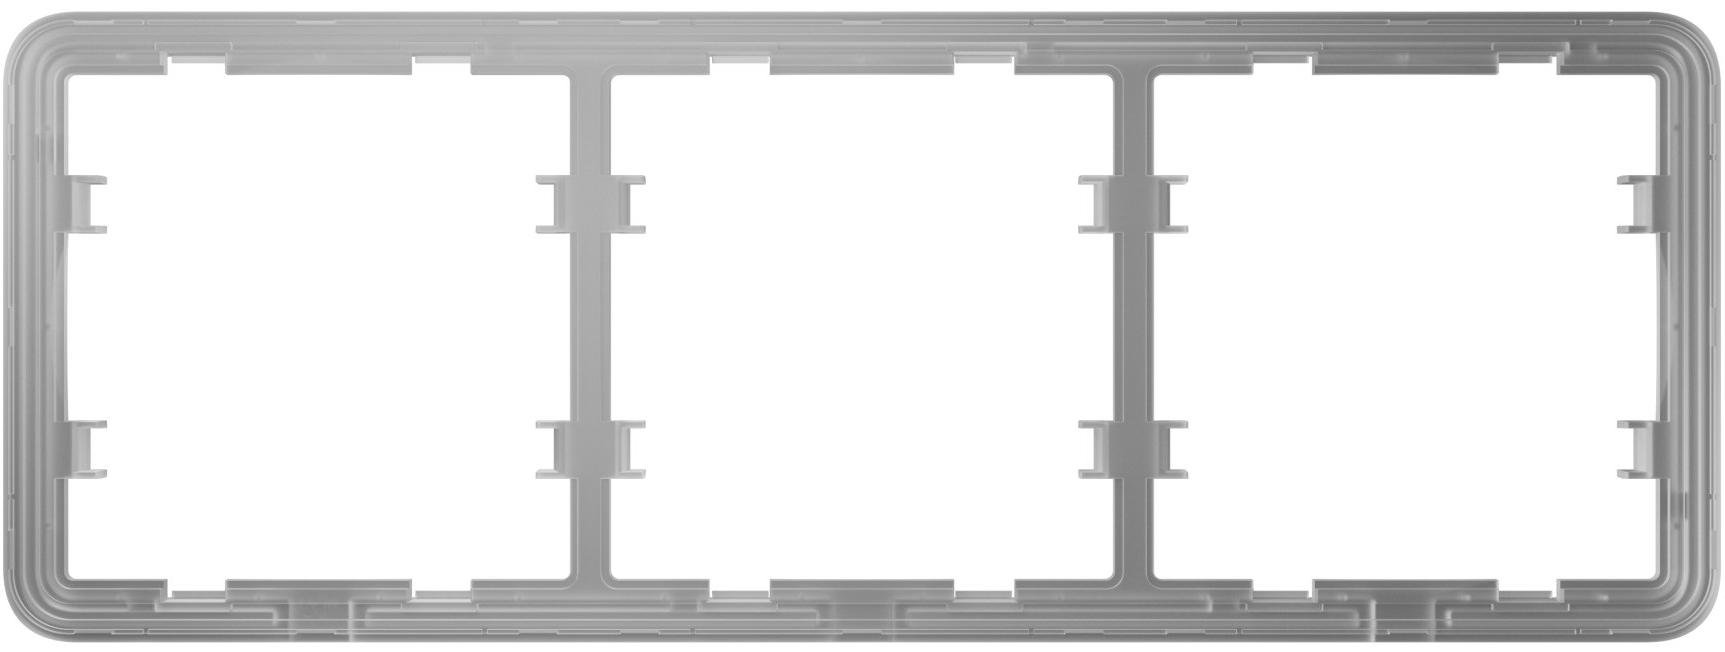 Ajax Frame (3 seats) [55] Рамка для трех выключателей Ajax Frame (3 seats) [55]